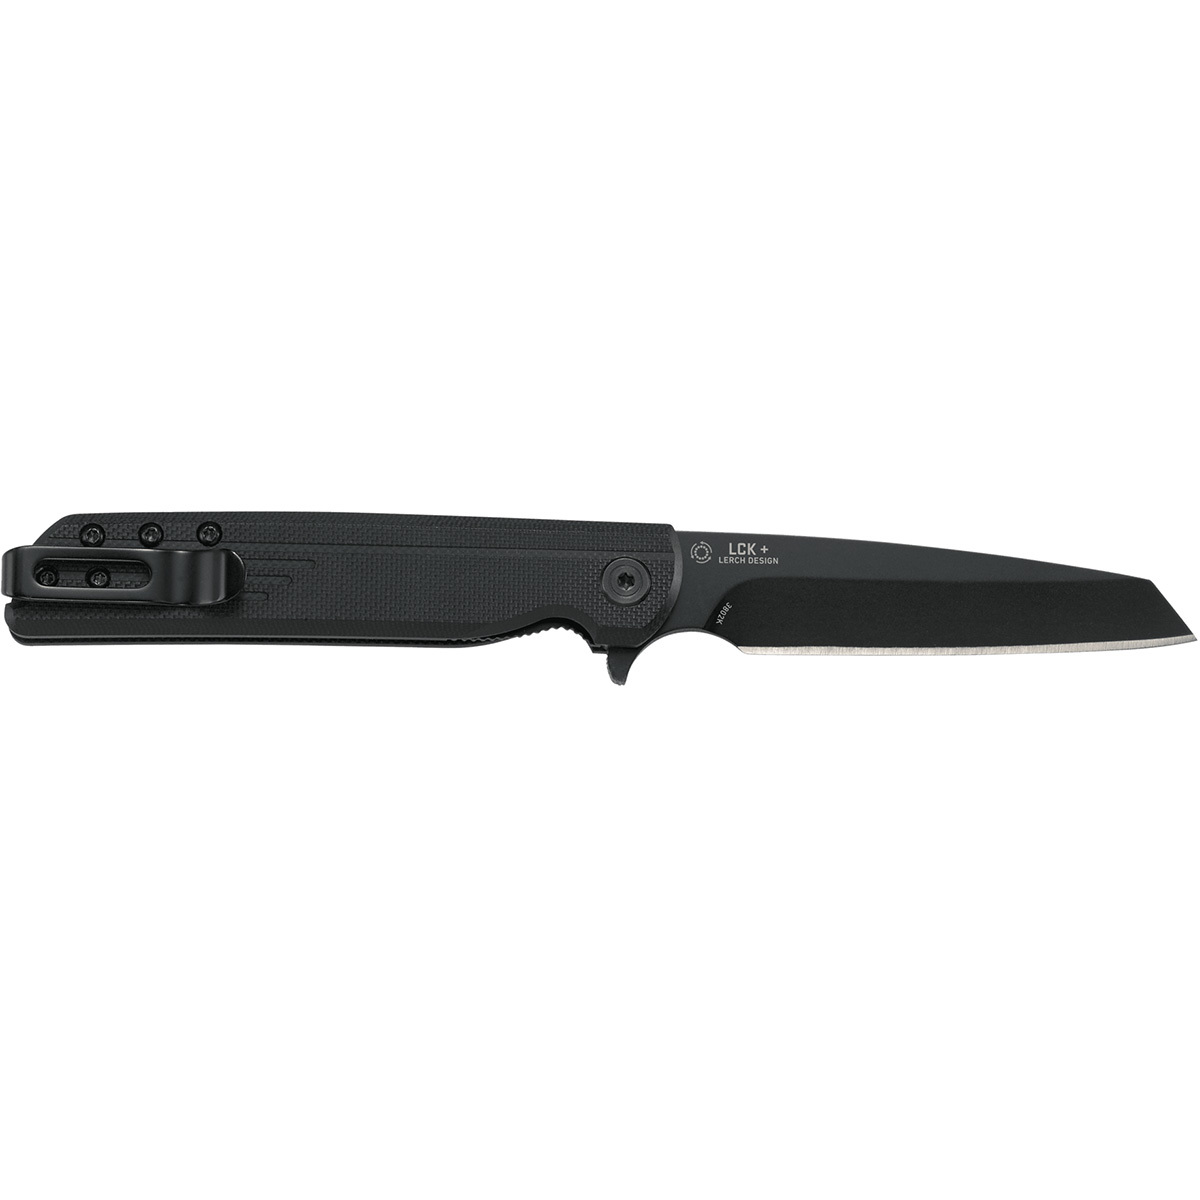 фото Полуавтоматический складной нож crkt lck+ tanto blackout, сталь 8cr13mov, рукоять термопластик grn